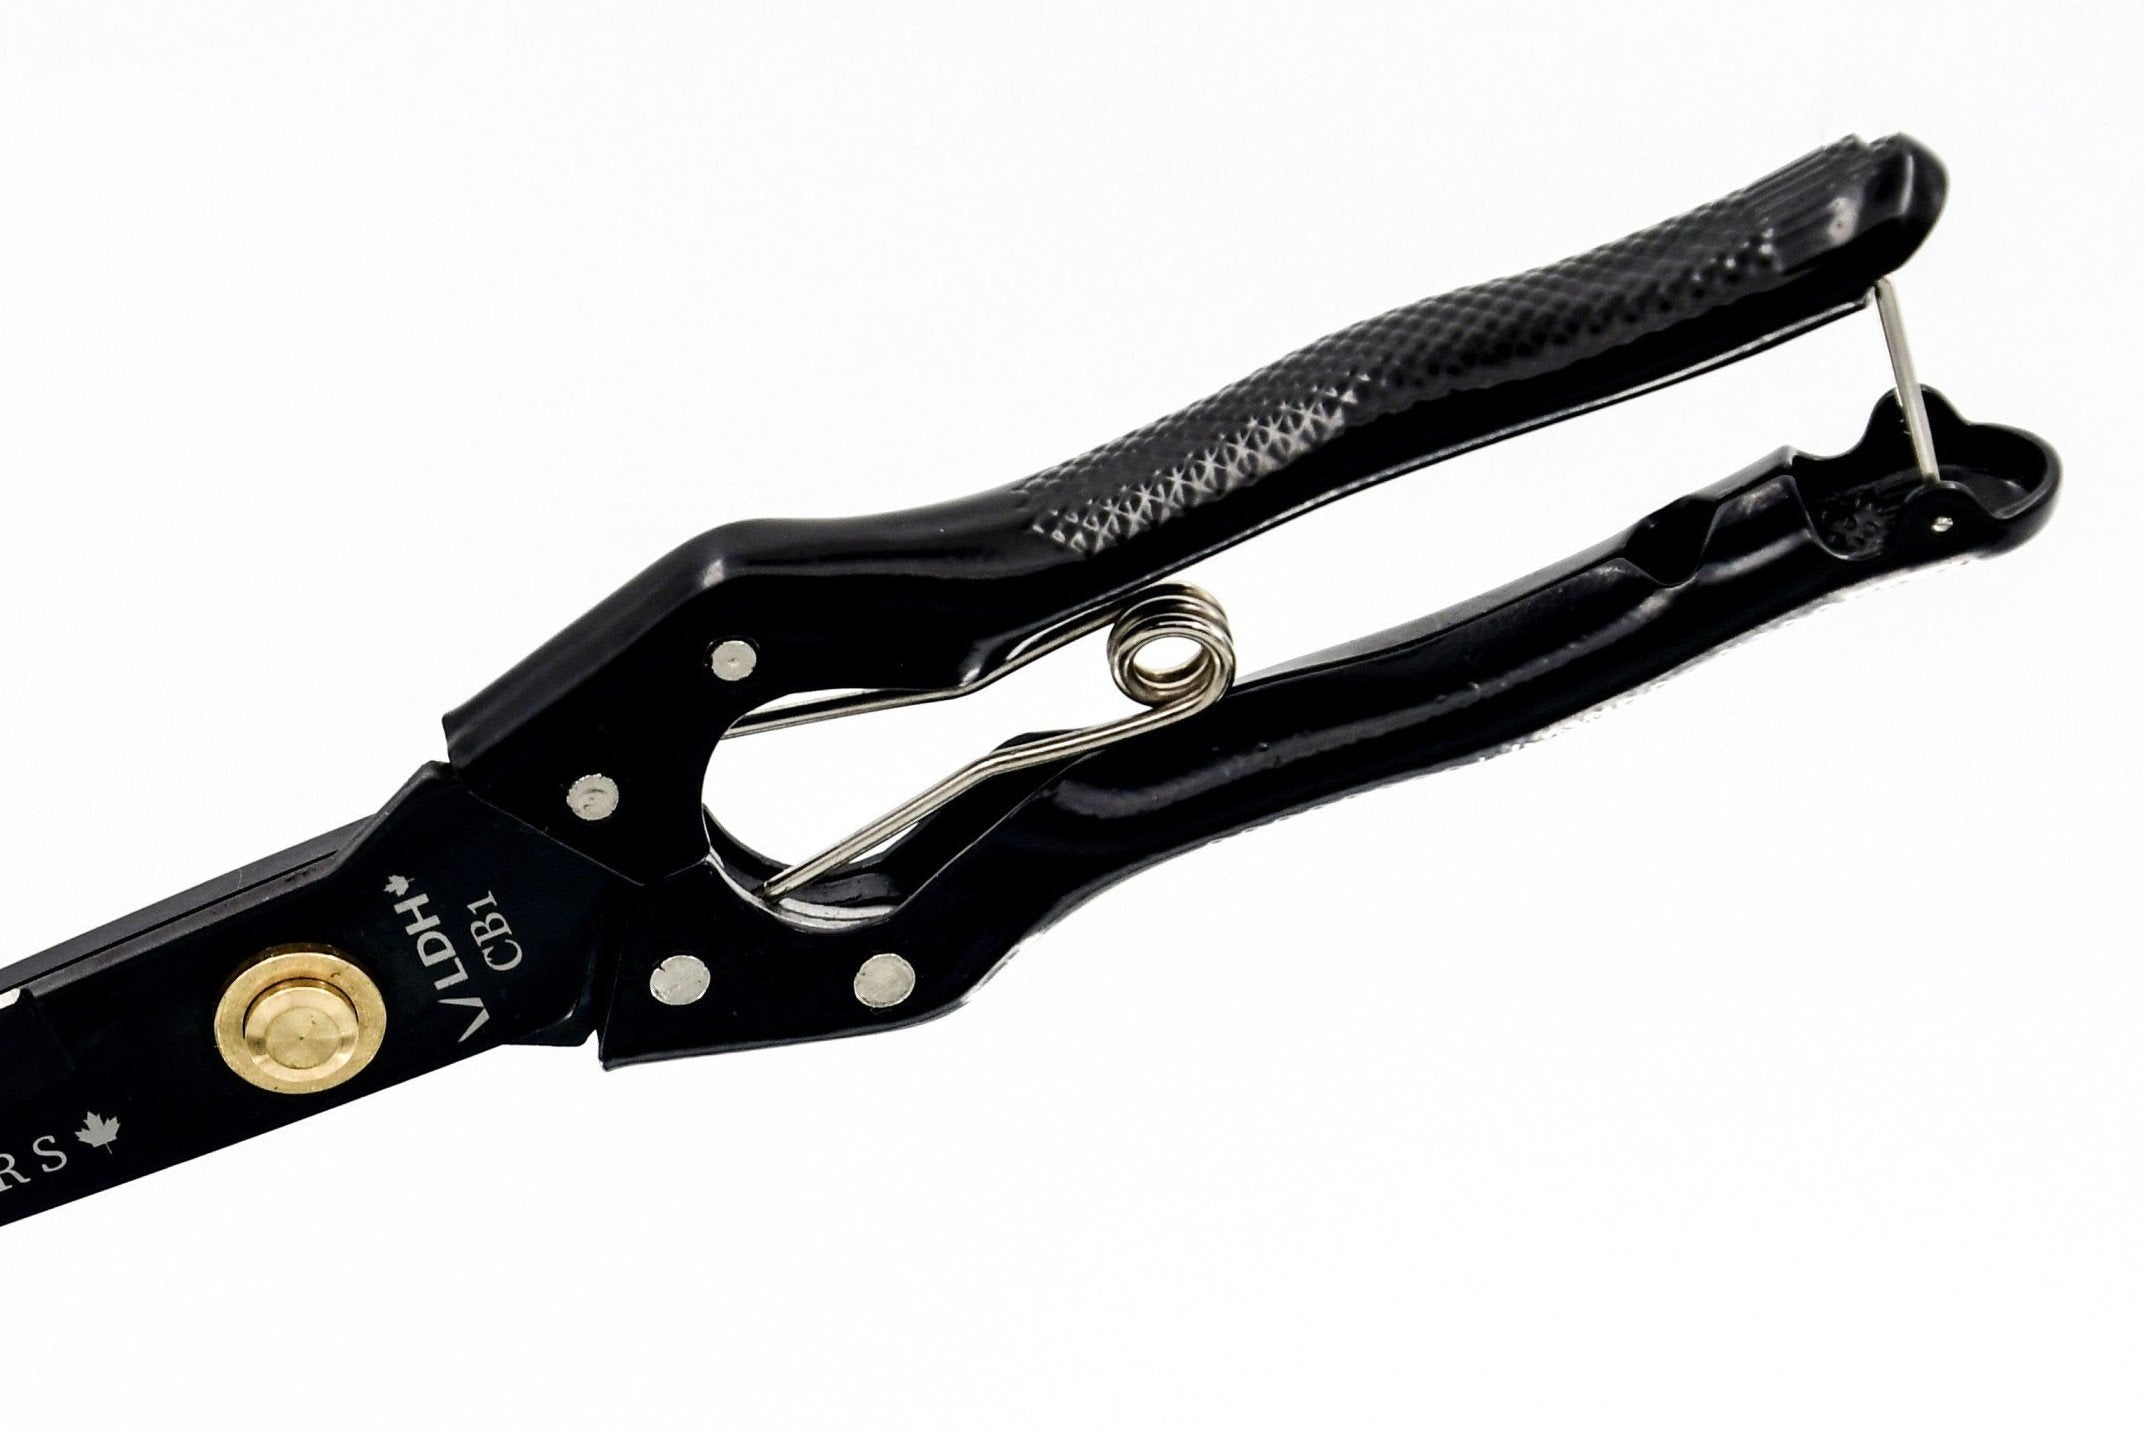  14” Black Midnight Edition Batting Shears | LDH Scissors